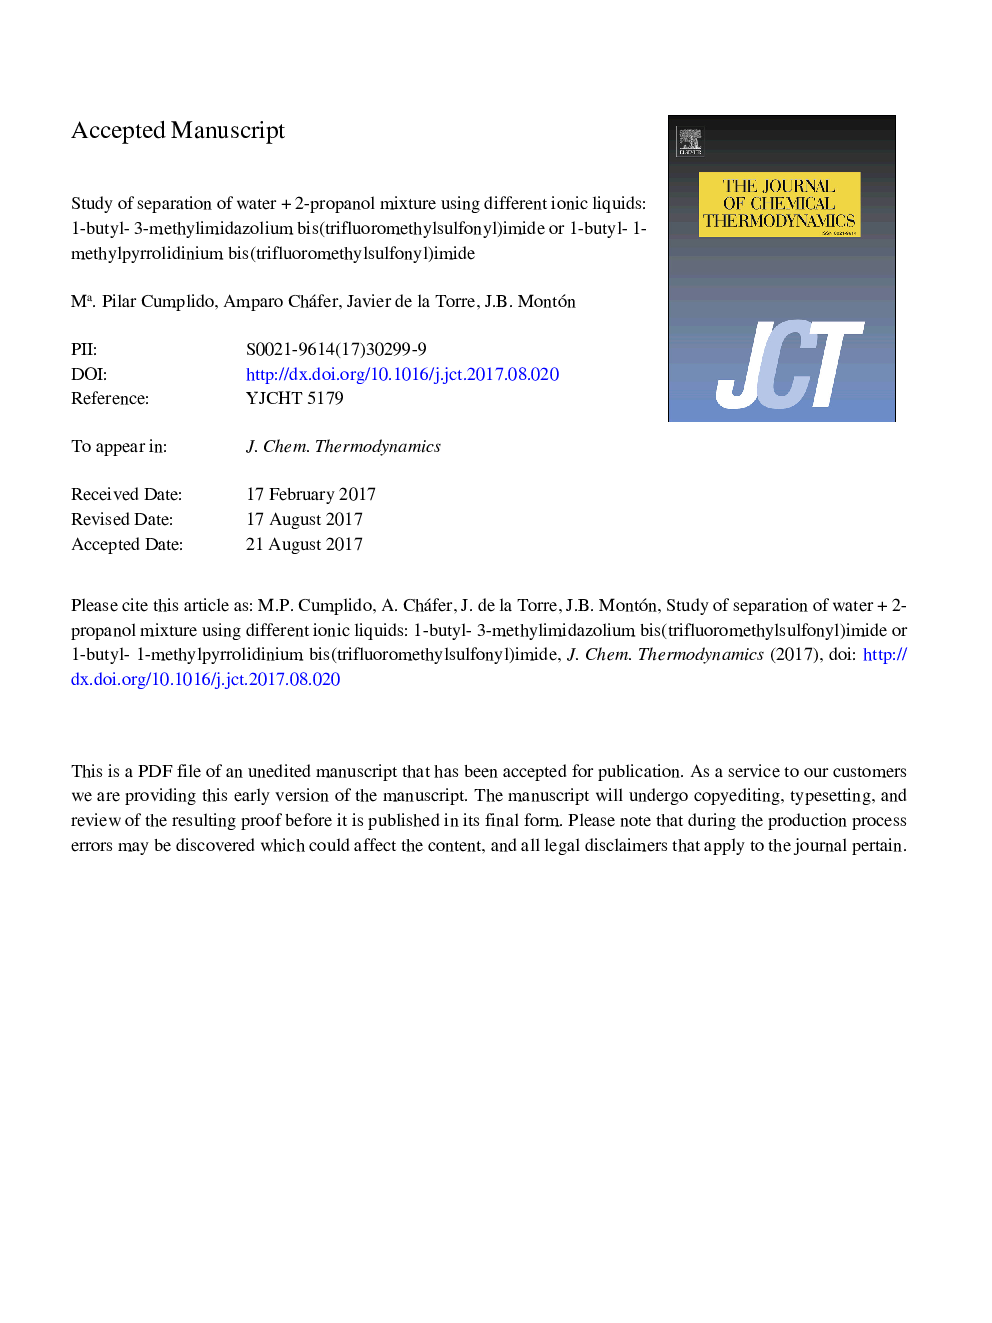 Study of separation of waterÂ +Â 2-propanol mixture using different ionic liquids: 1-Butyl-3-methylimidazolium bis(trifluoromethylsulfonyl)imide or 1-butyl-1-methylpyrrolidinium bis(trifluoromethylsulfonyl)imide